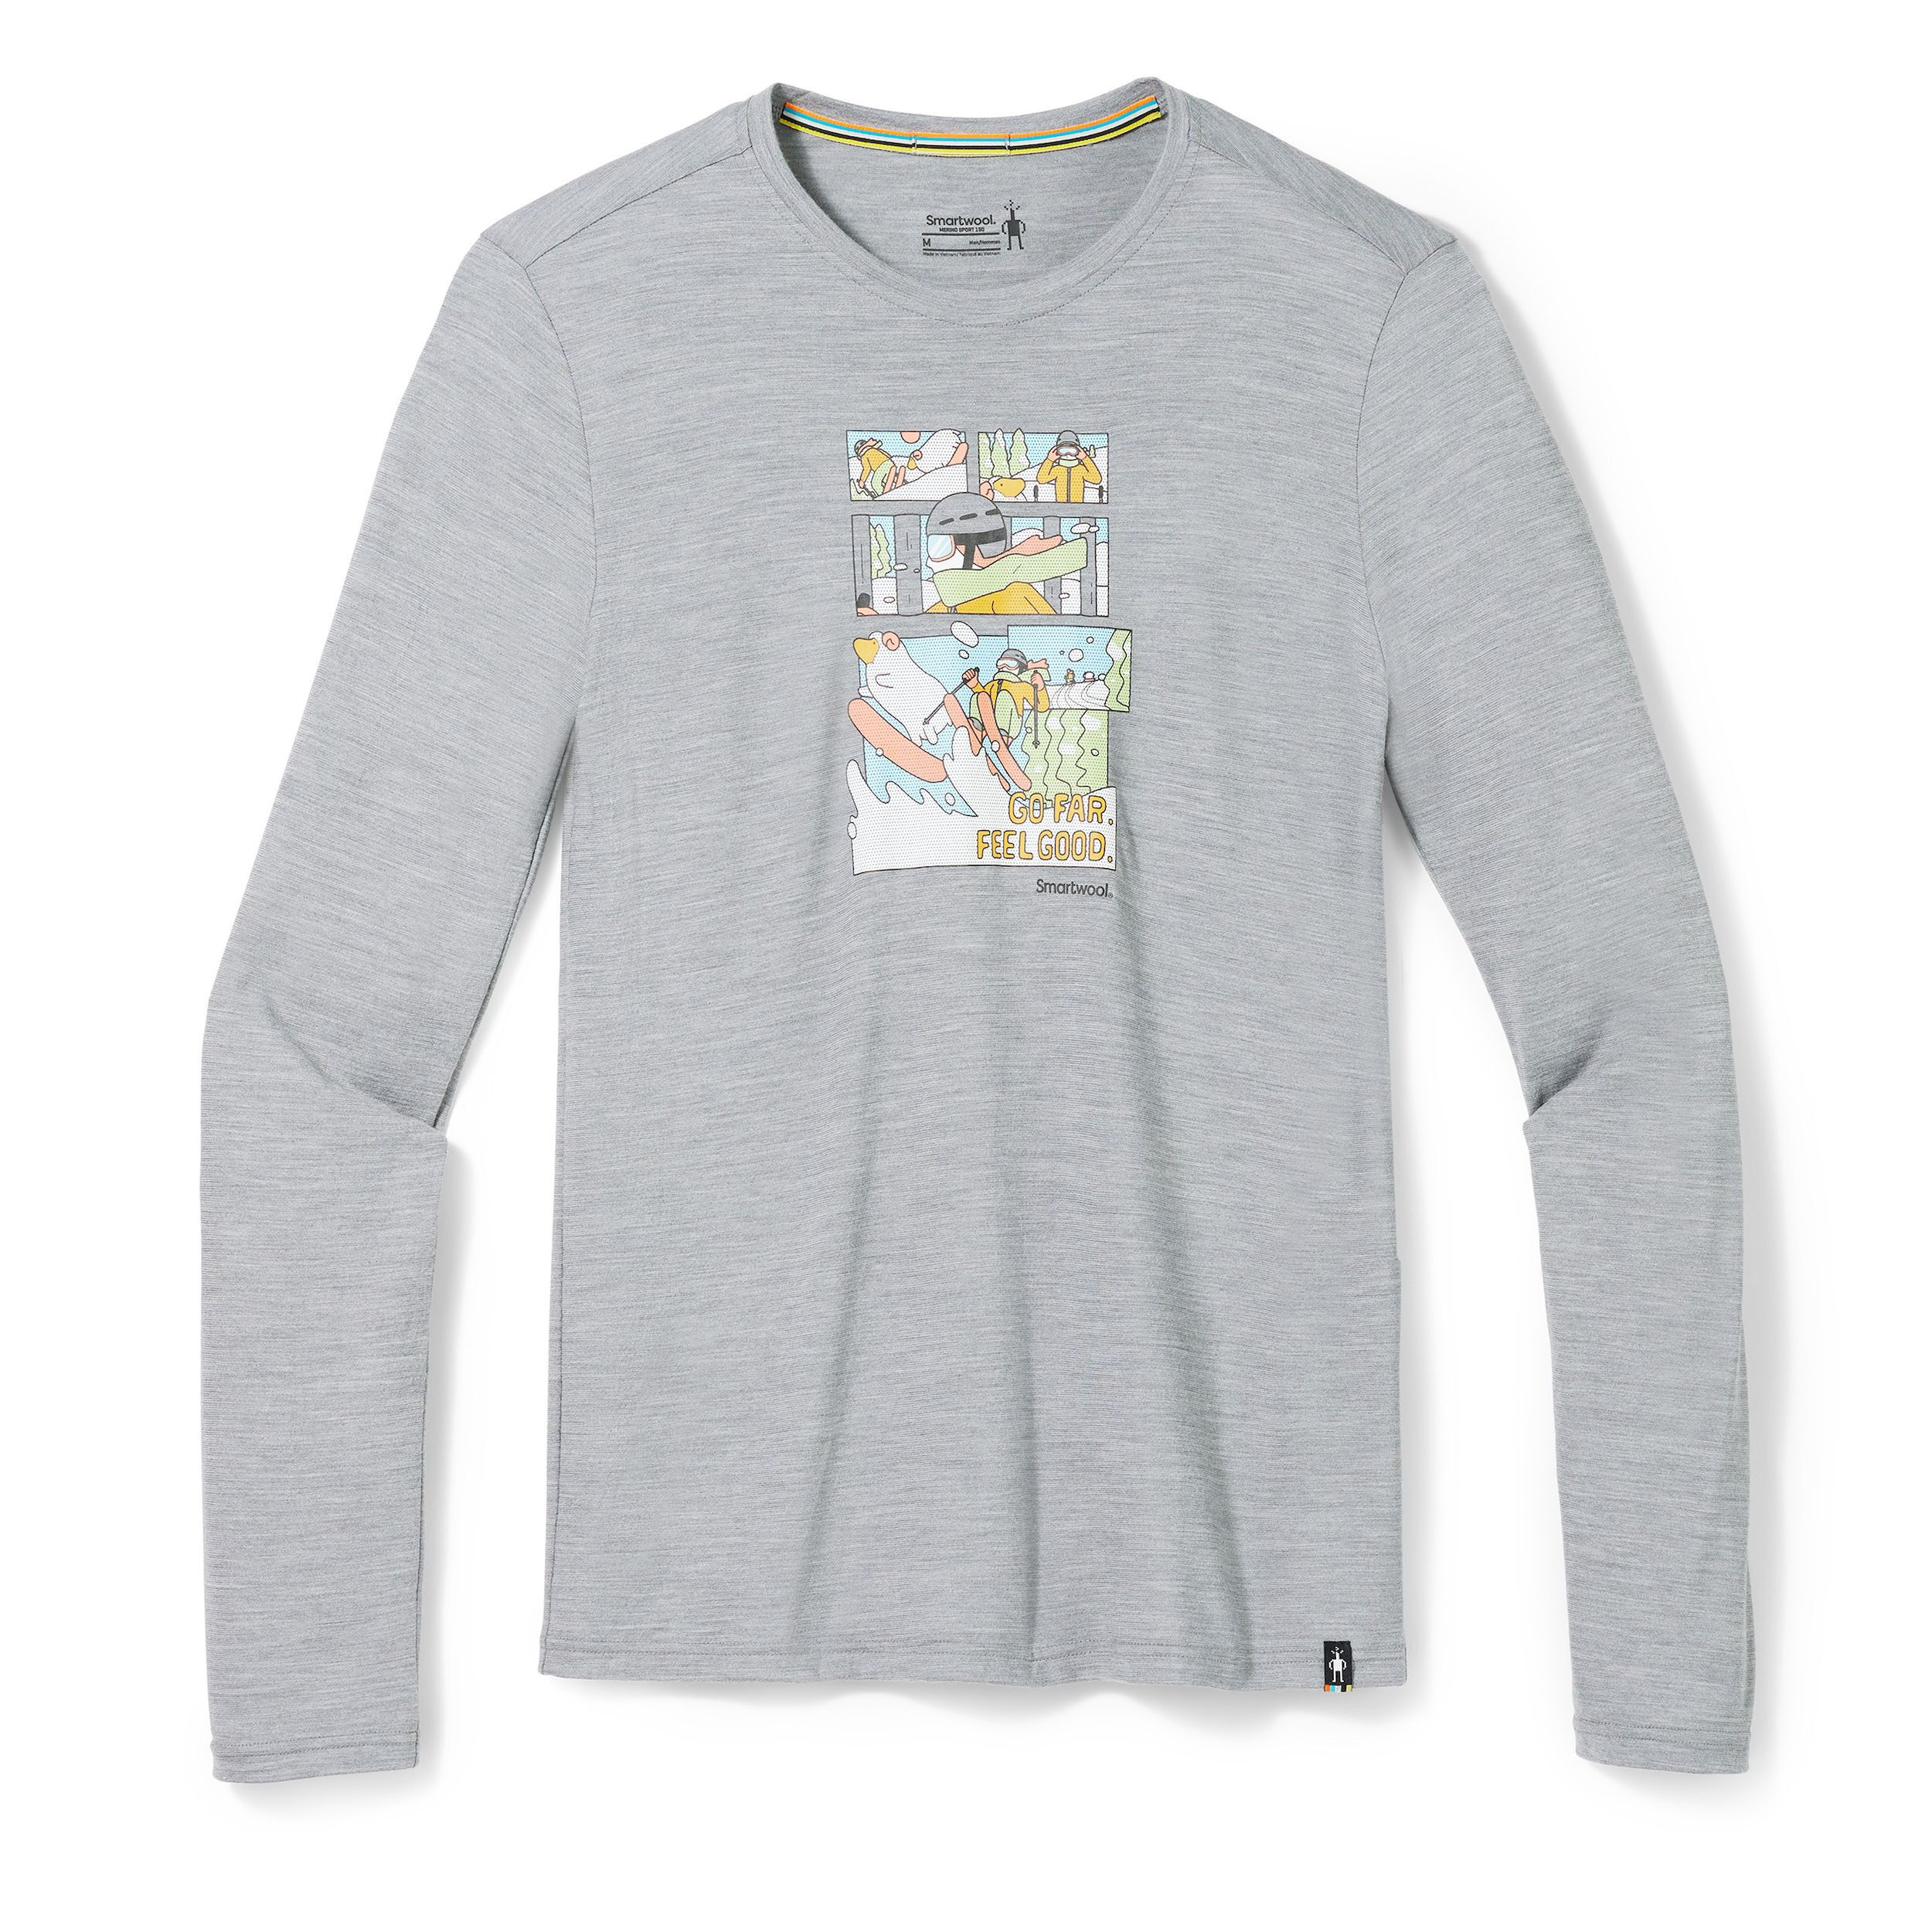 Smartwool Winter Adventure Long Sleeve Graphic Tee Slim Fit - Camiseta - Hombre